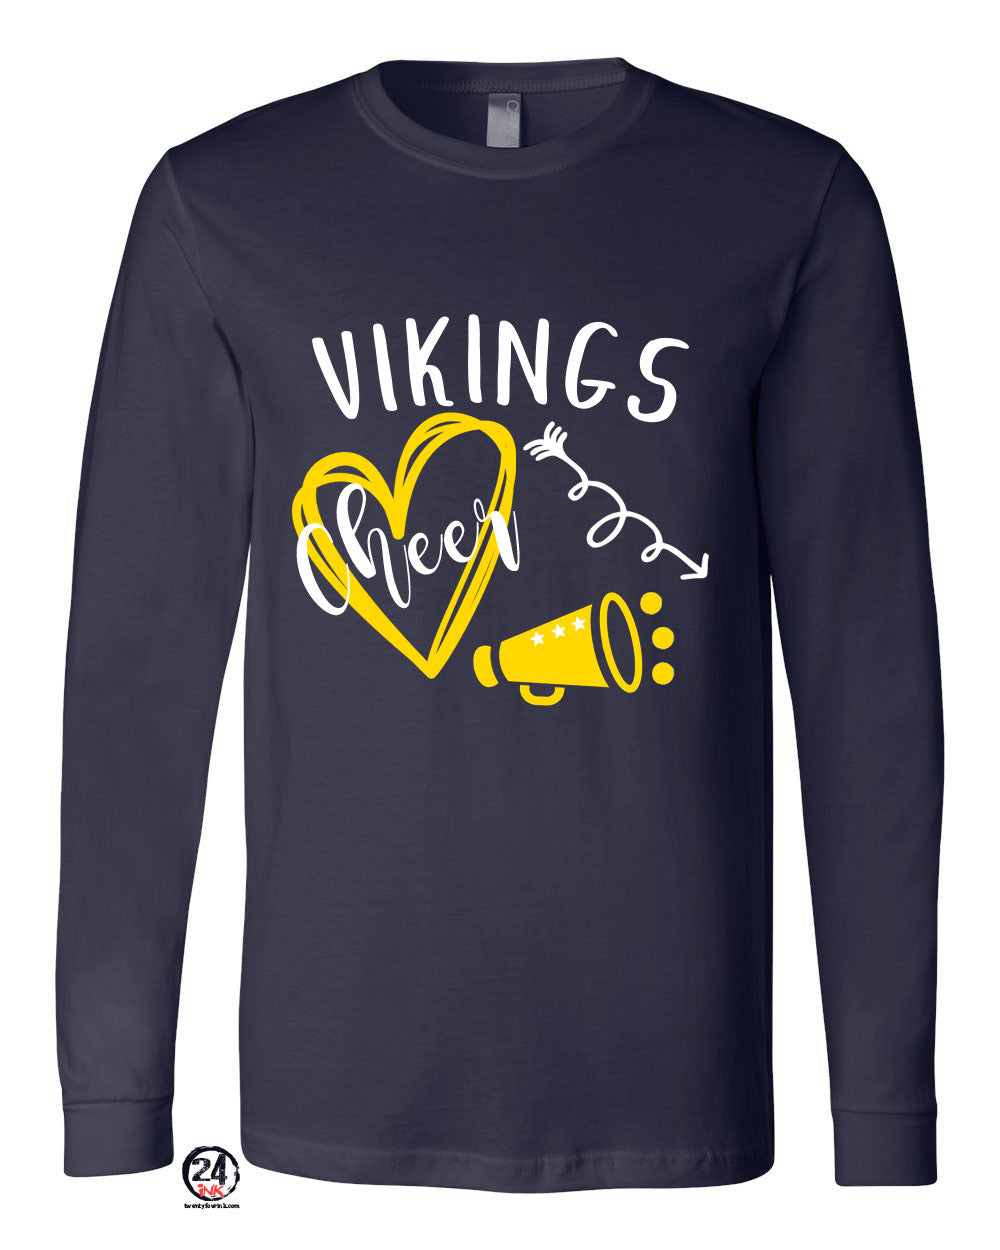 Vikings Cheer Design 3 Long Sleeve Shirt